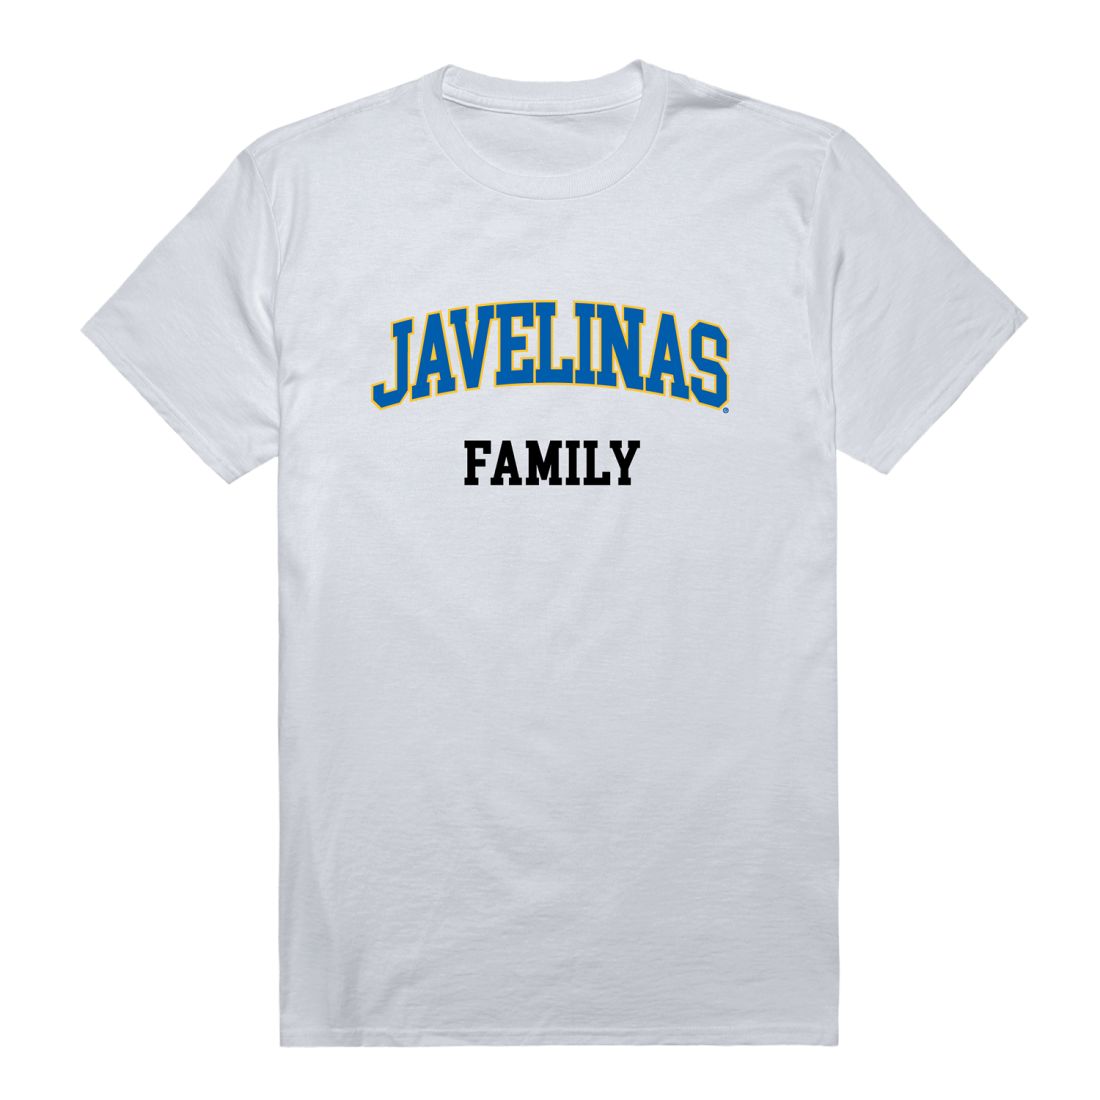 TAMUK Texas A&M University - Kingsville Javelinas Family T-Shirt